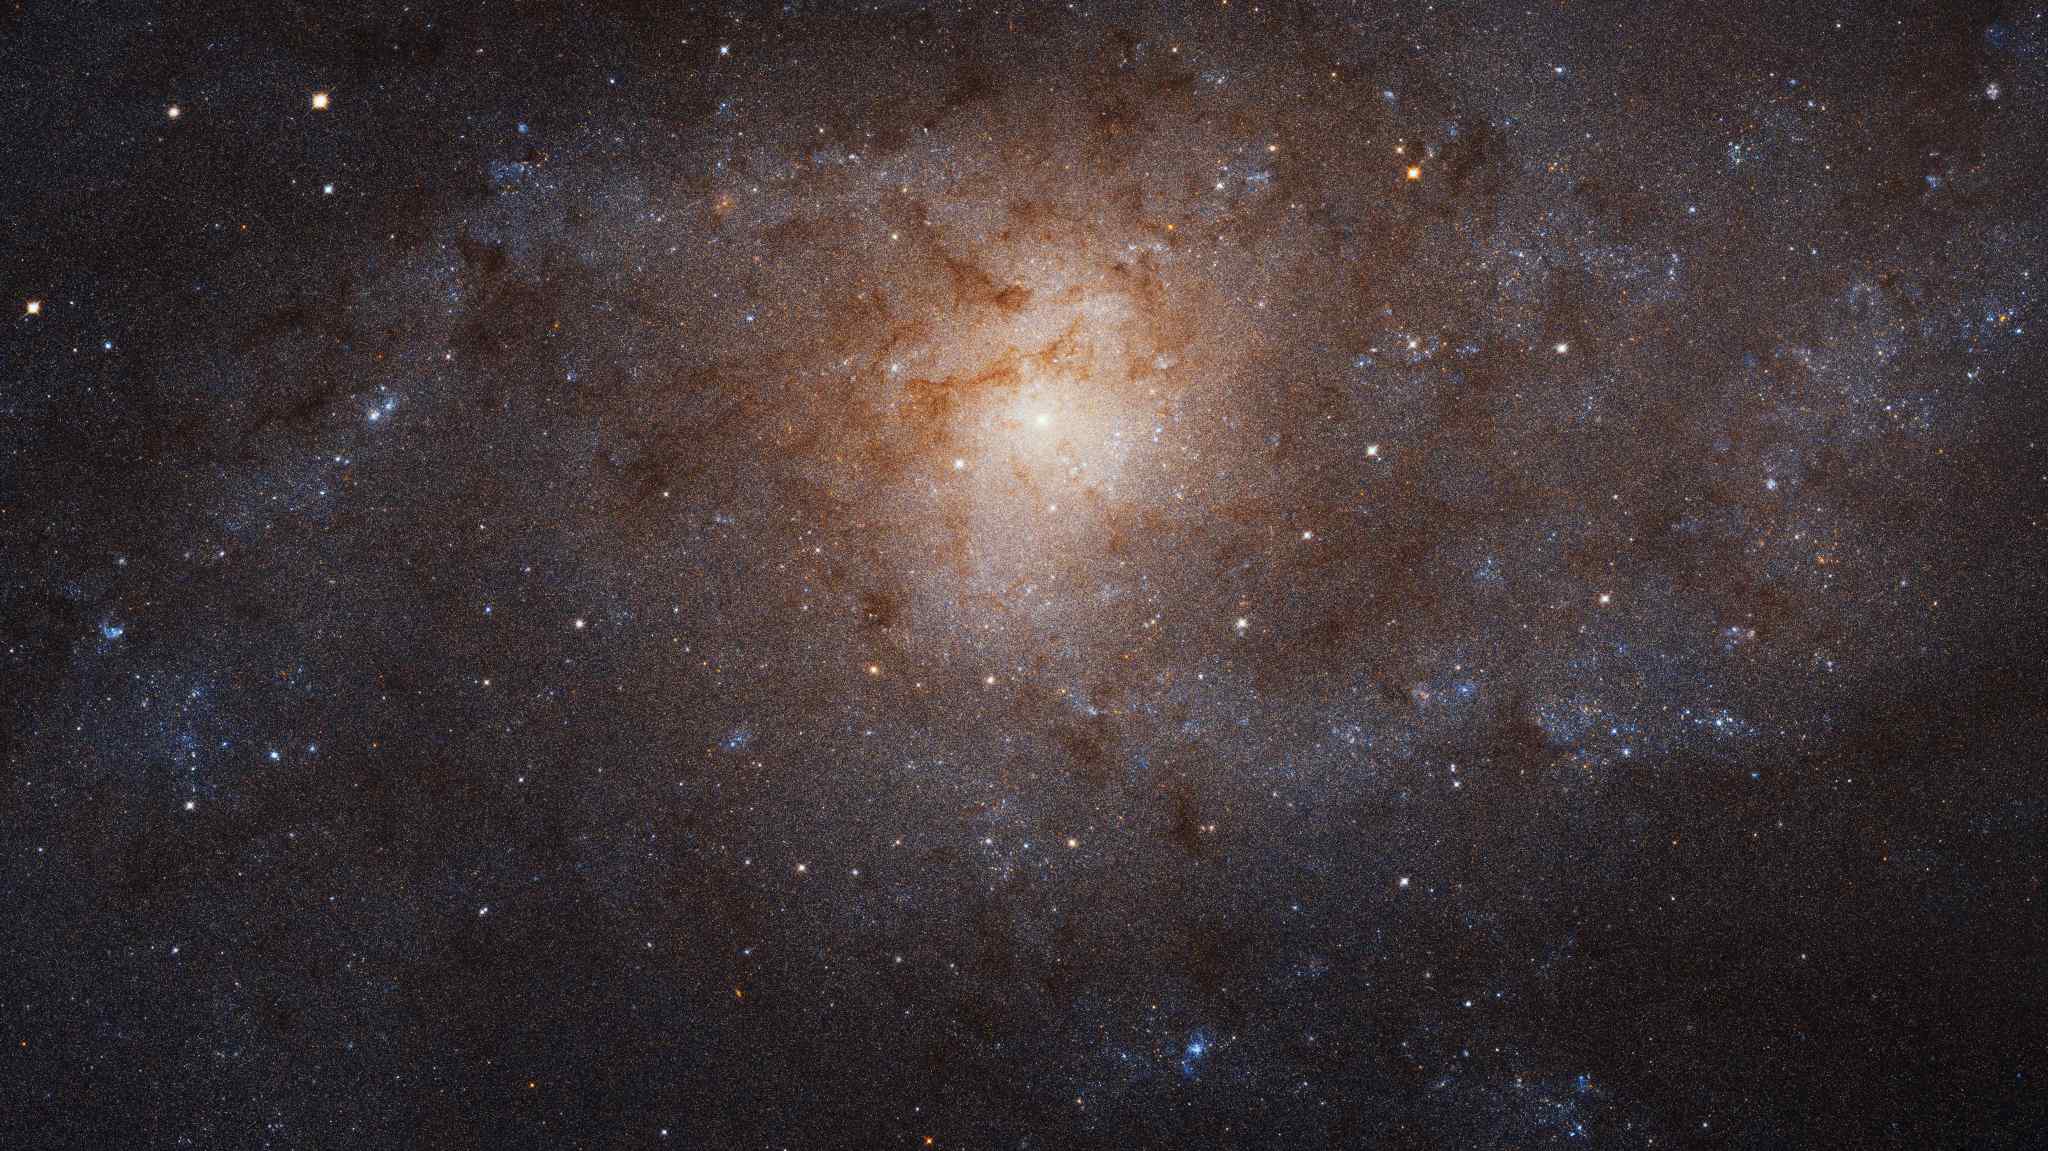 Image of Triangulum galaxy (M33)